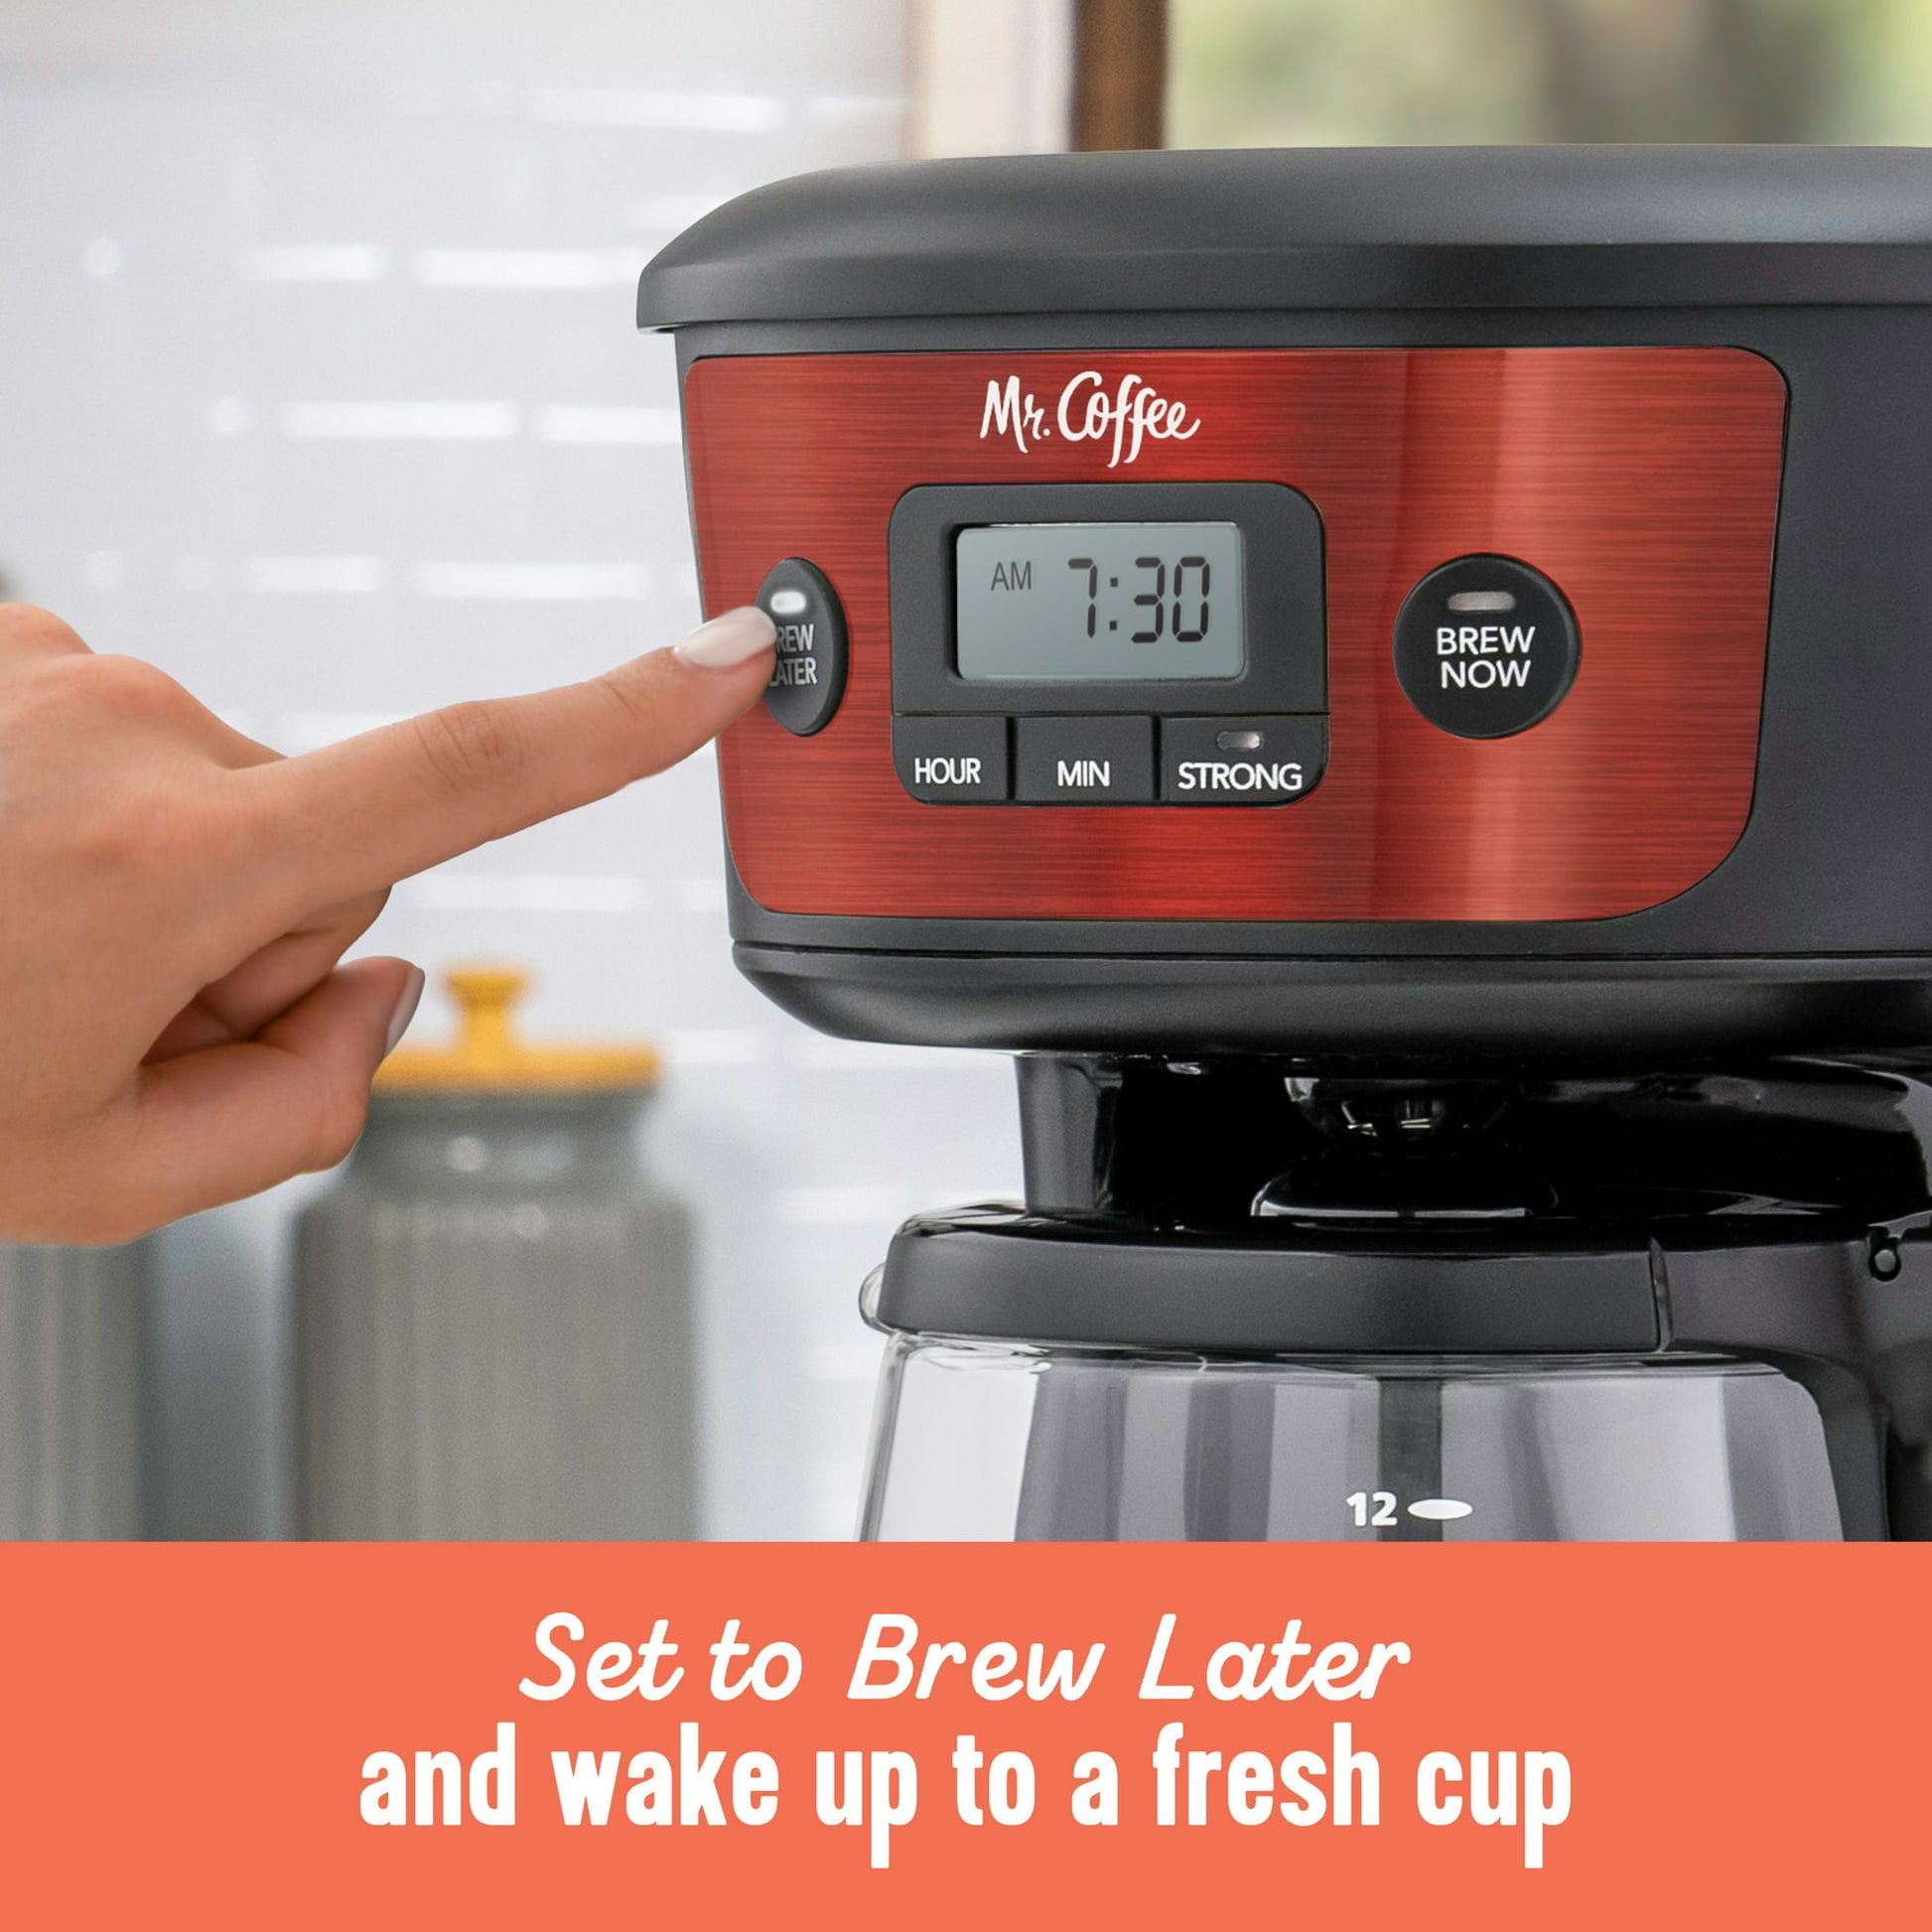 Mr. Coffee 12-Cup Programmable Coffeemaker, Rapid Brew, Brushed Metallic 